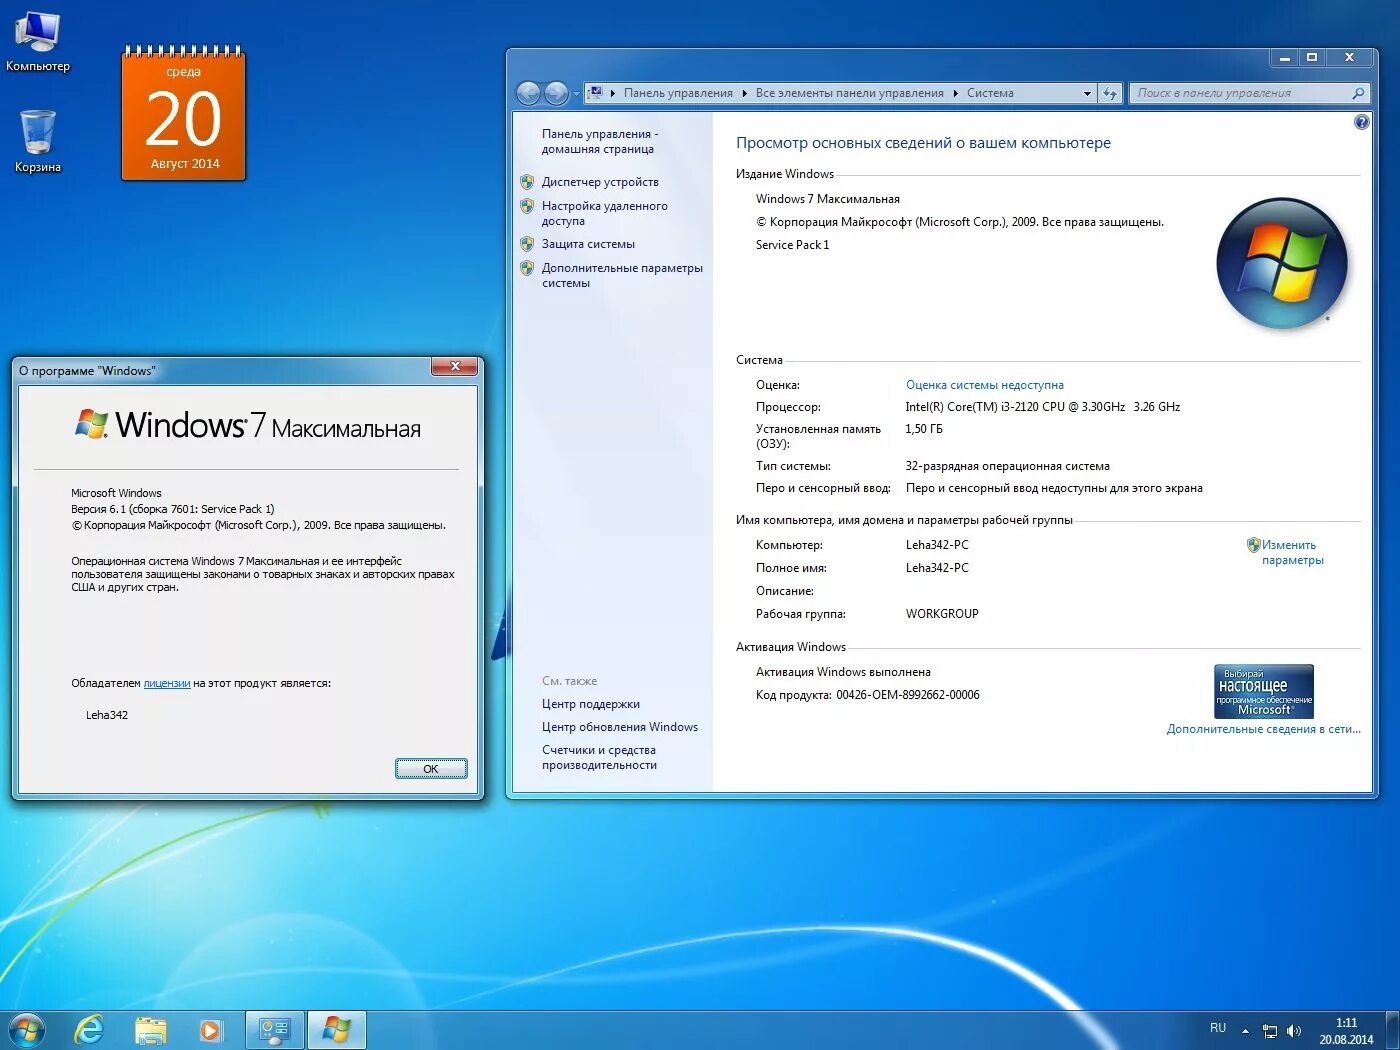 Установка Windows 7 Ultimate. Активатор 7601 Windows программа. Windows 7 Ultimate sp1 2012 the Project. Программа активации виндовс 7.